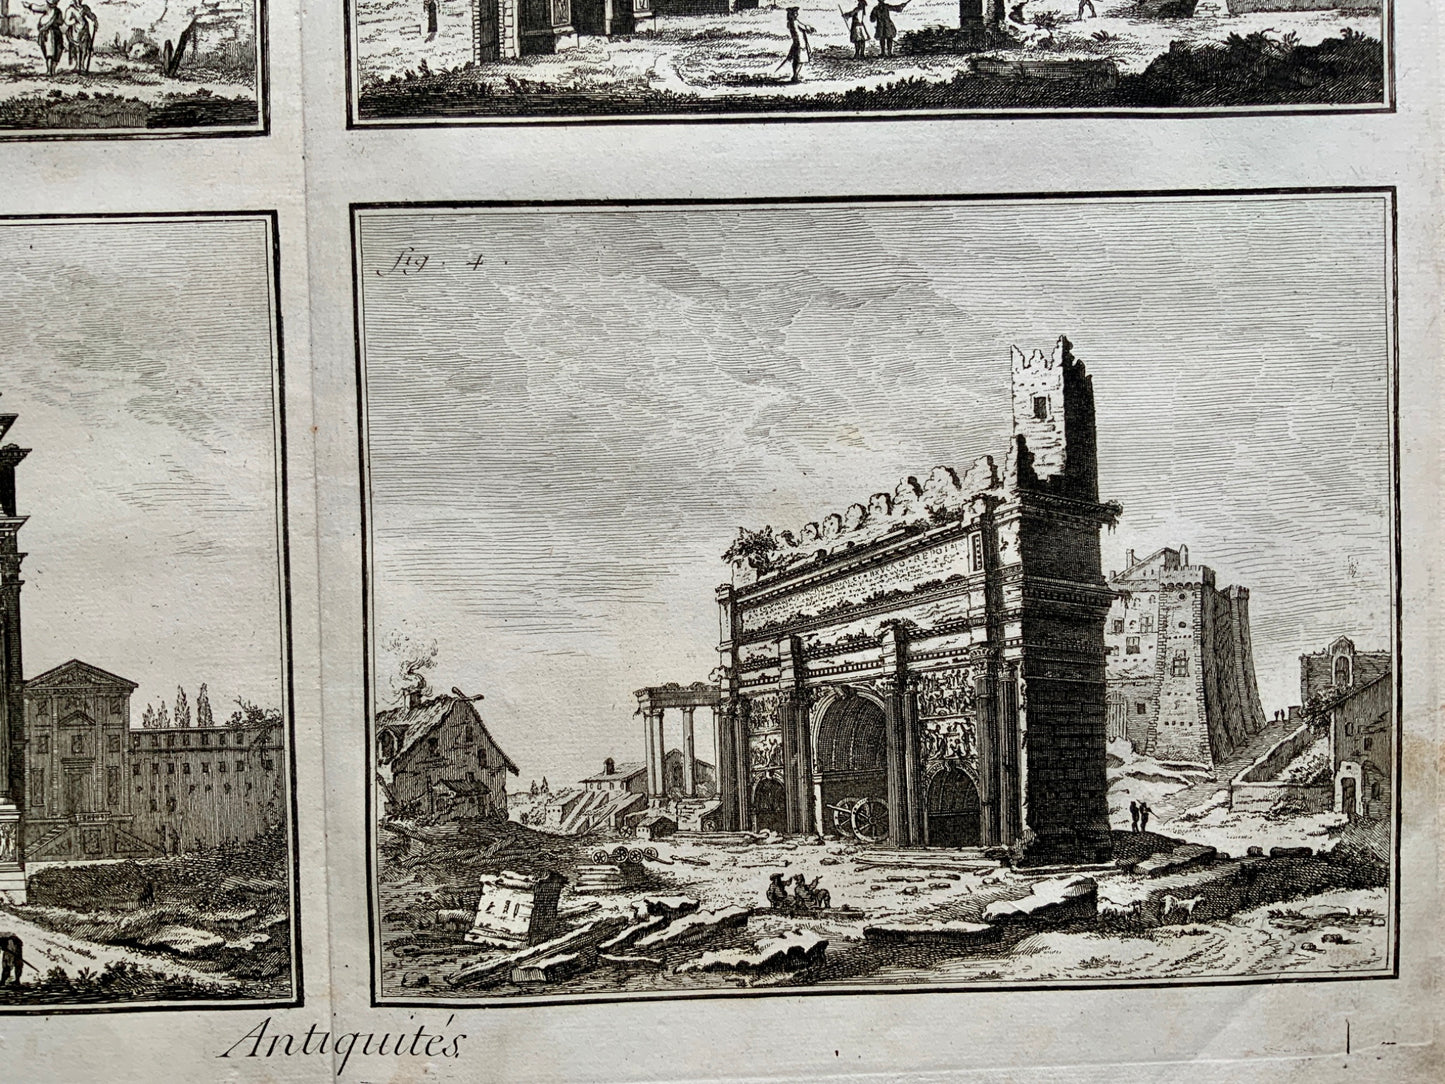 1777 Diderot - Italy: Rome, Arch of Constantine & Sept. Severus - double folio